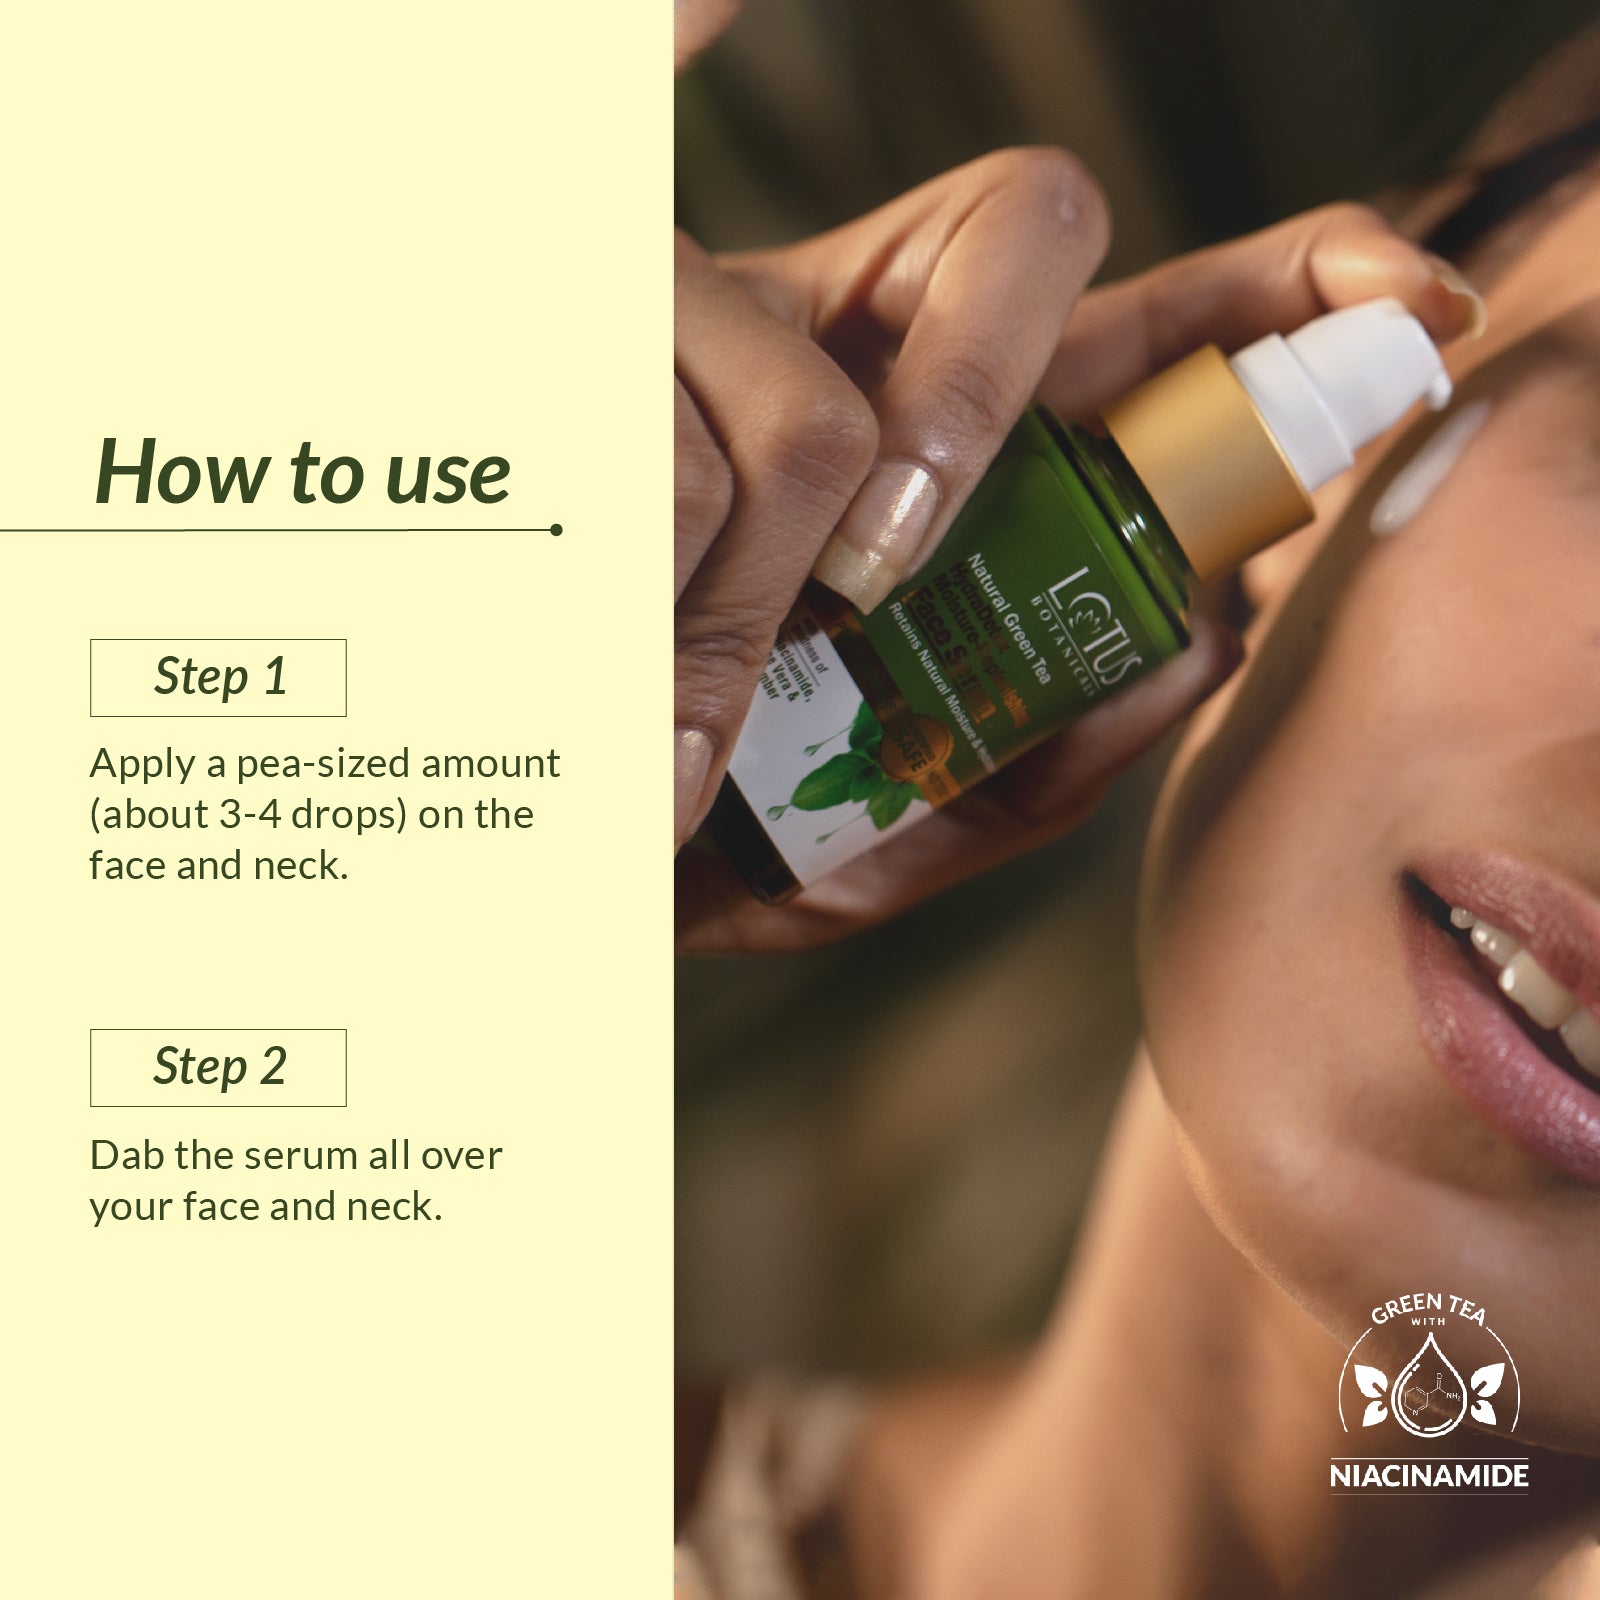 Natural Green Tea HydraDetox Moisture-Replenishing Face Serum